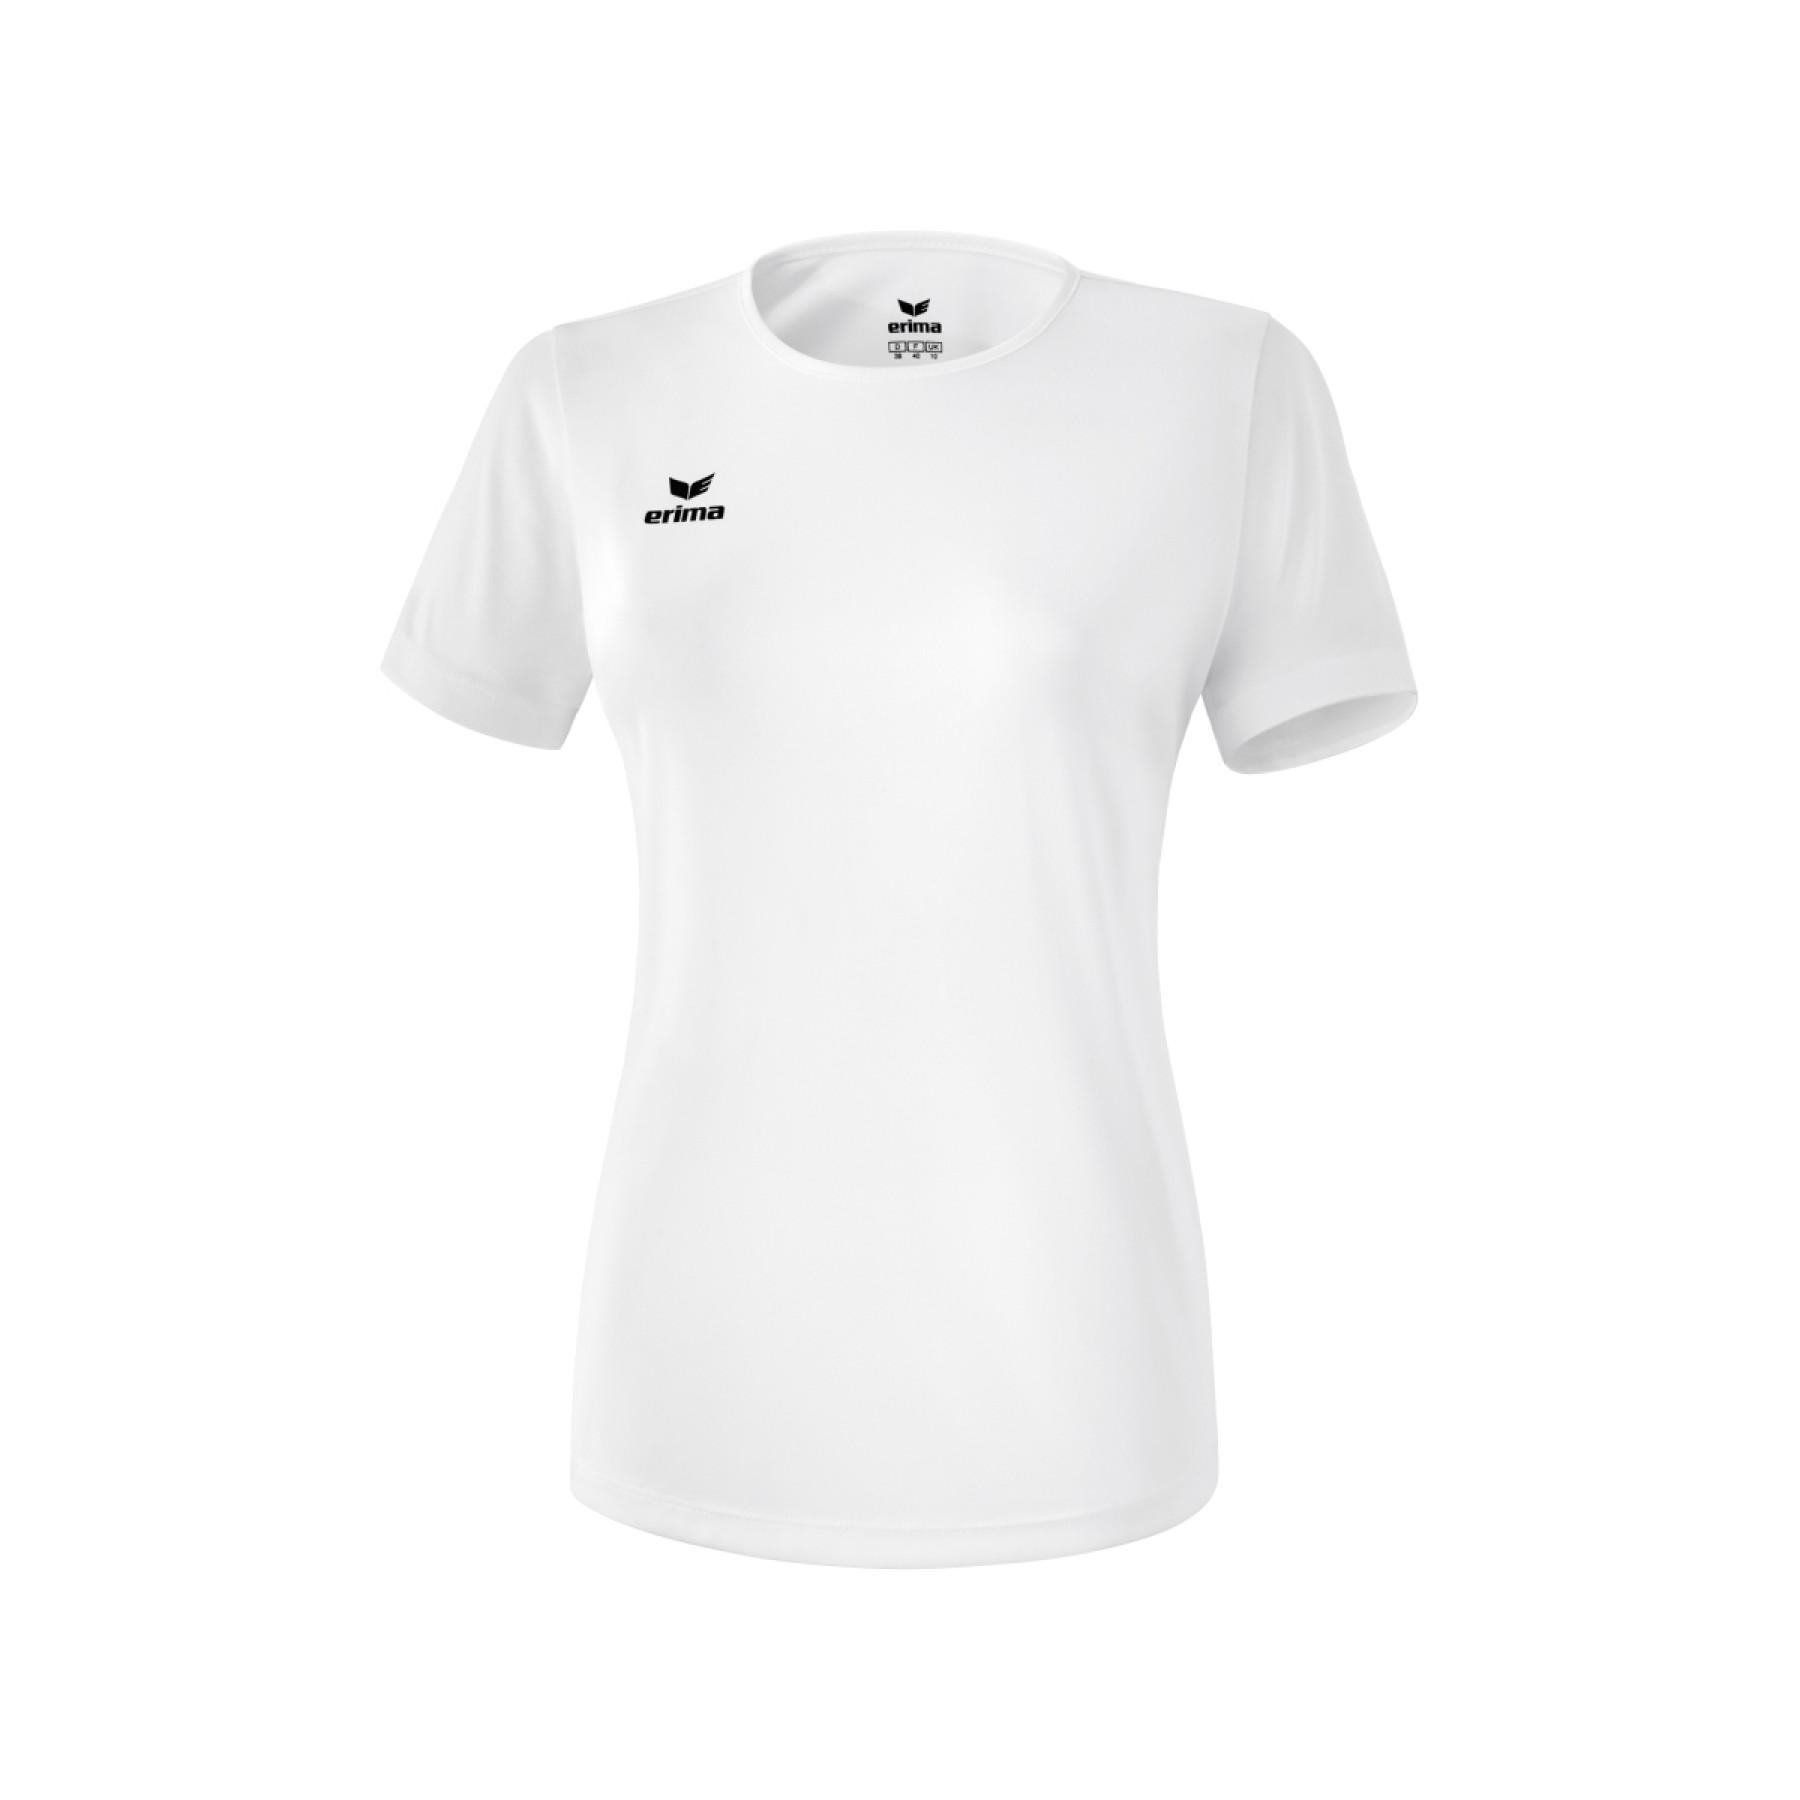 Frauen-T-Shirt Erima Fonctionnel Teamsport